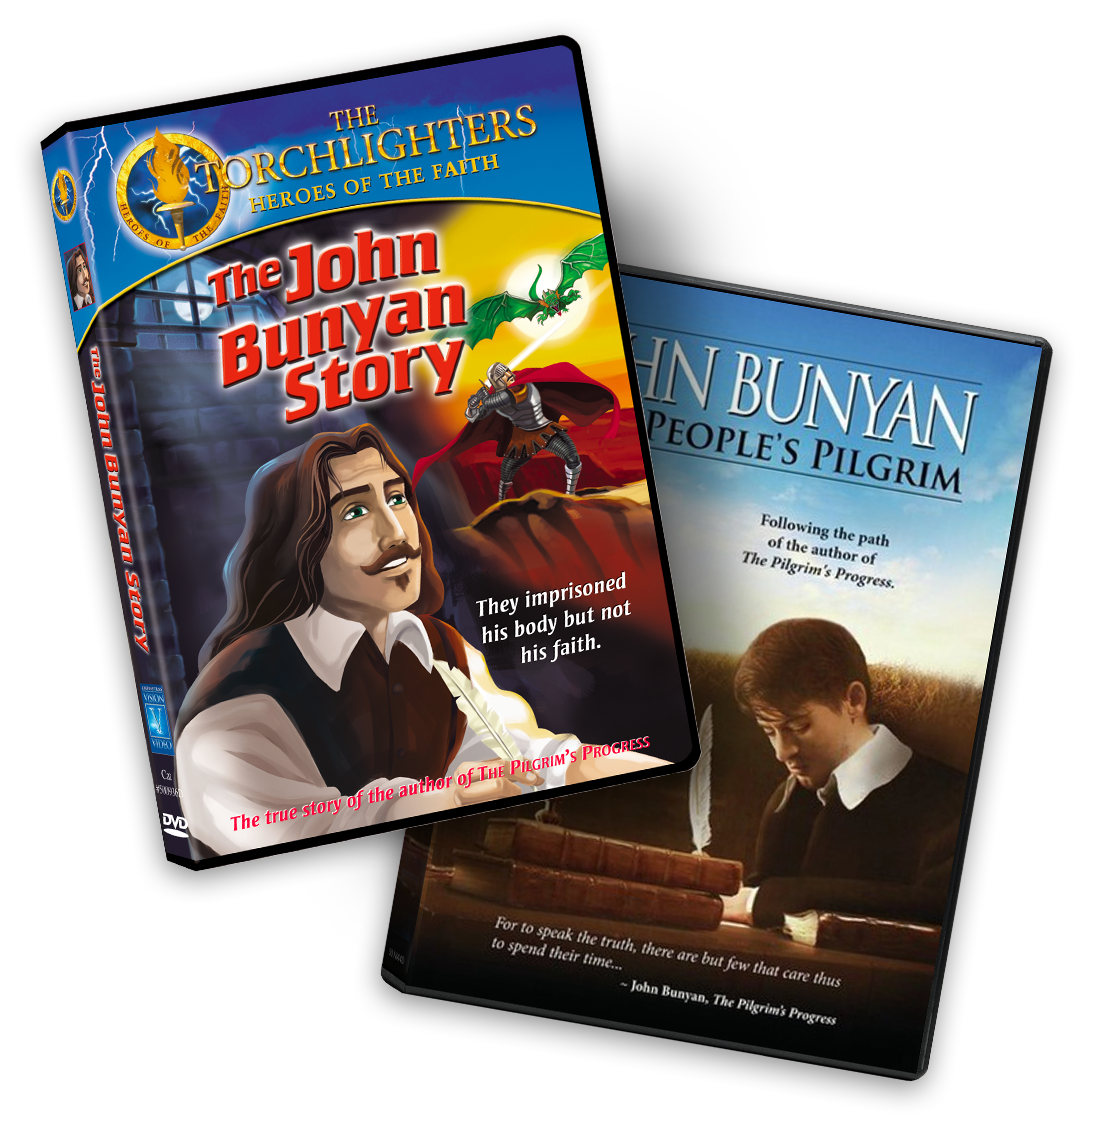 Two DVDs: The John Bunyan Story and John Bunyan: The Journey of a Pilgrim